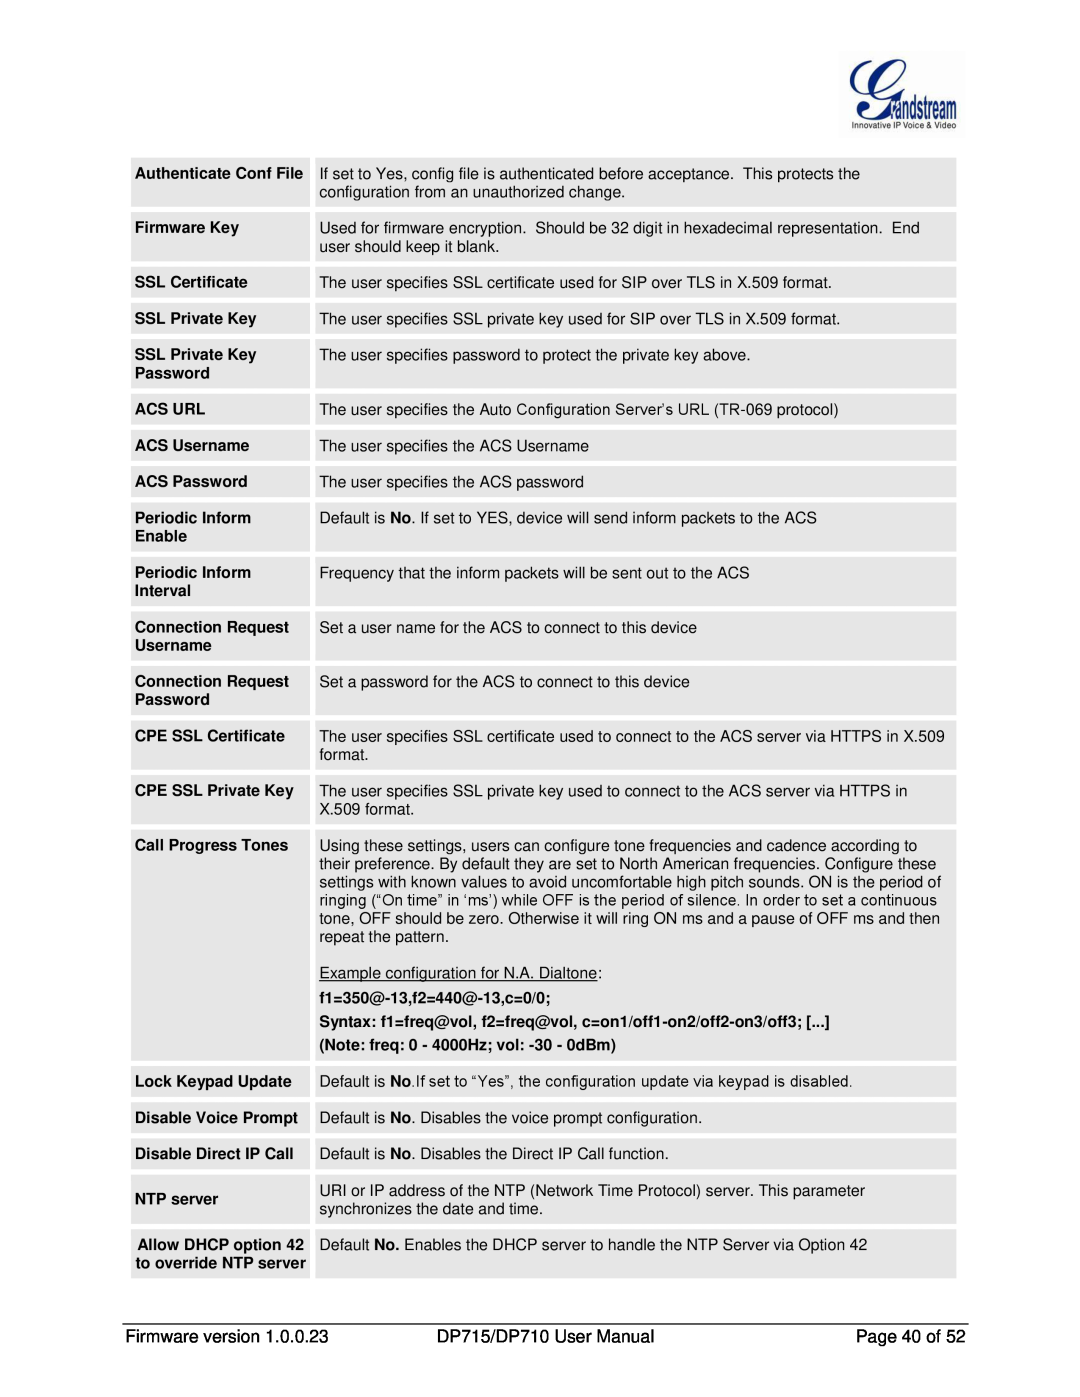 Grandstream Networks manual Firmware version, DP715/DP710 User Manual, Page 40 of 